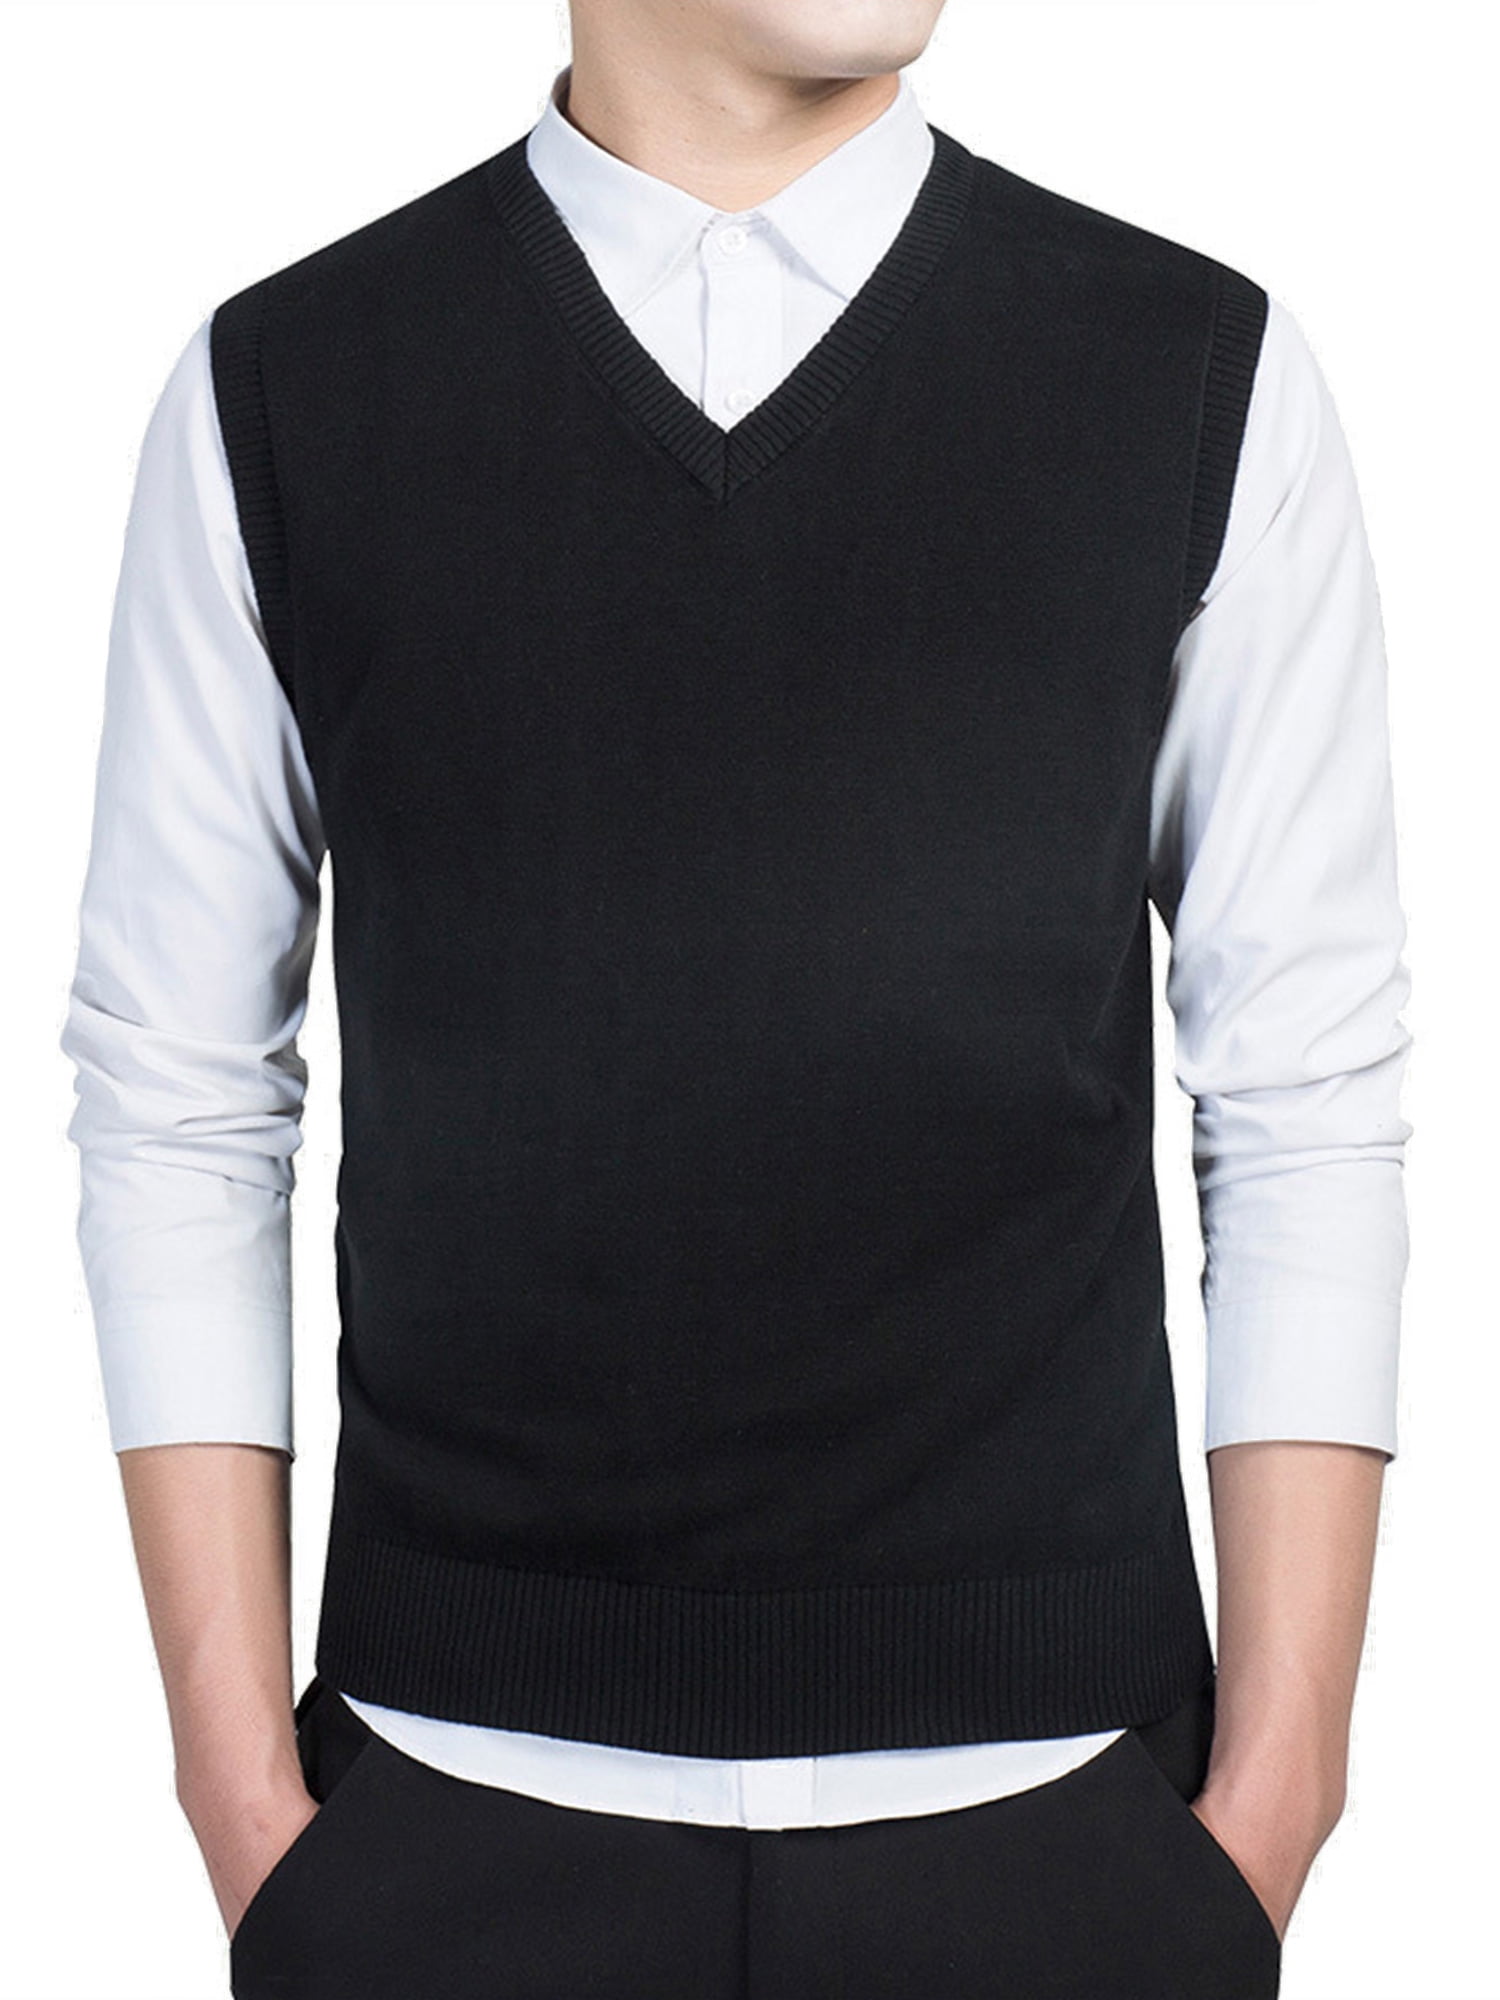 Mens Sleeveless Fine Knit Sweater Vest Jumper Plain V-Neck Pullover Smart S-4XL 